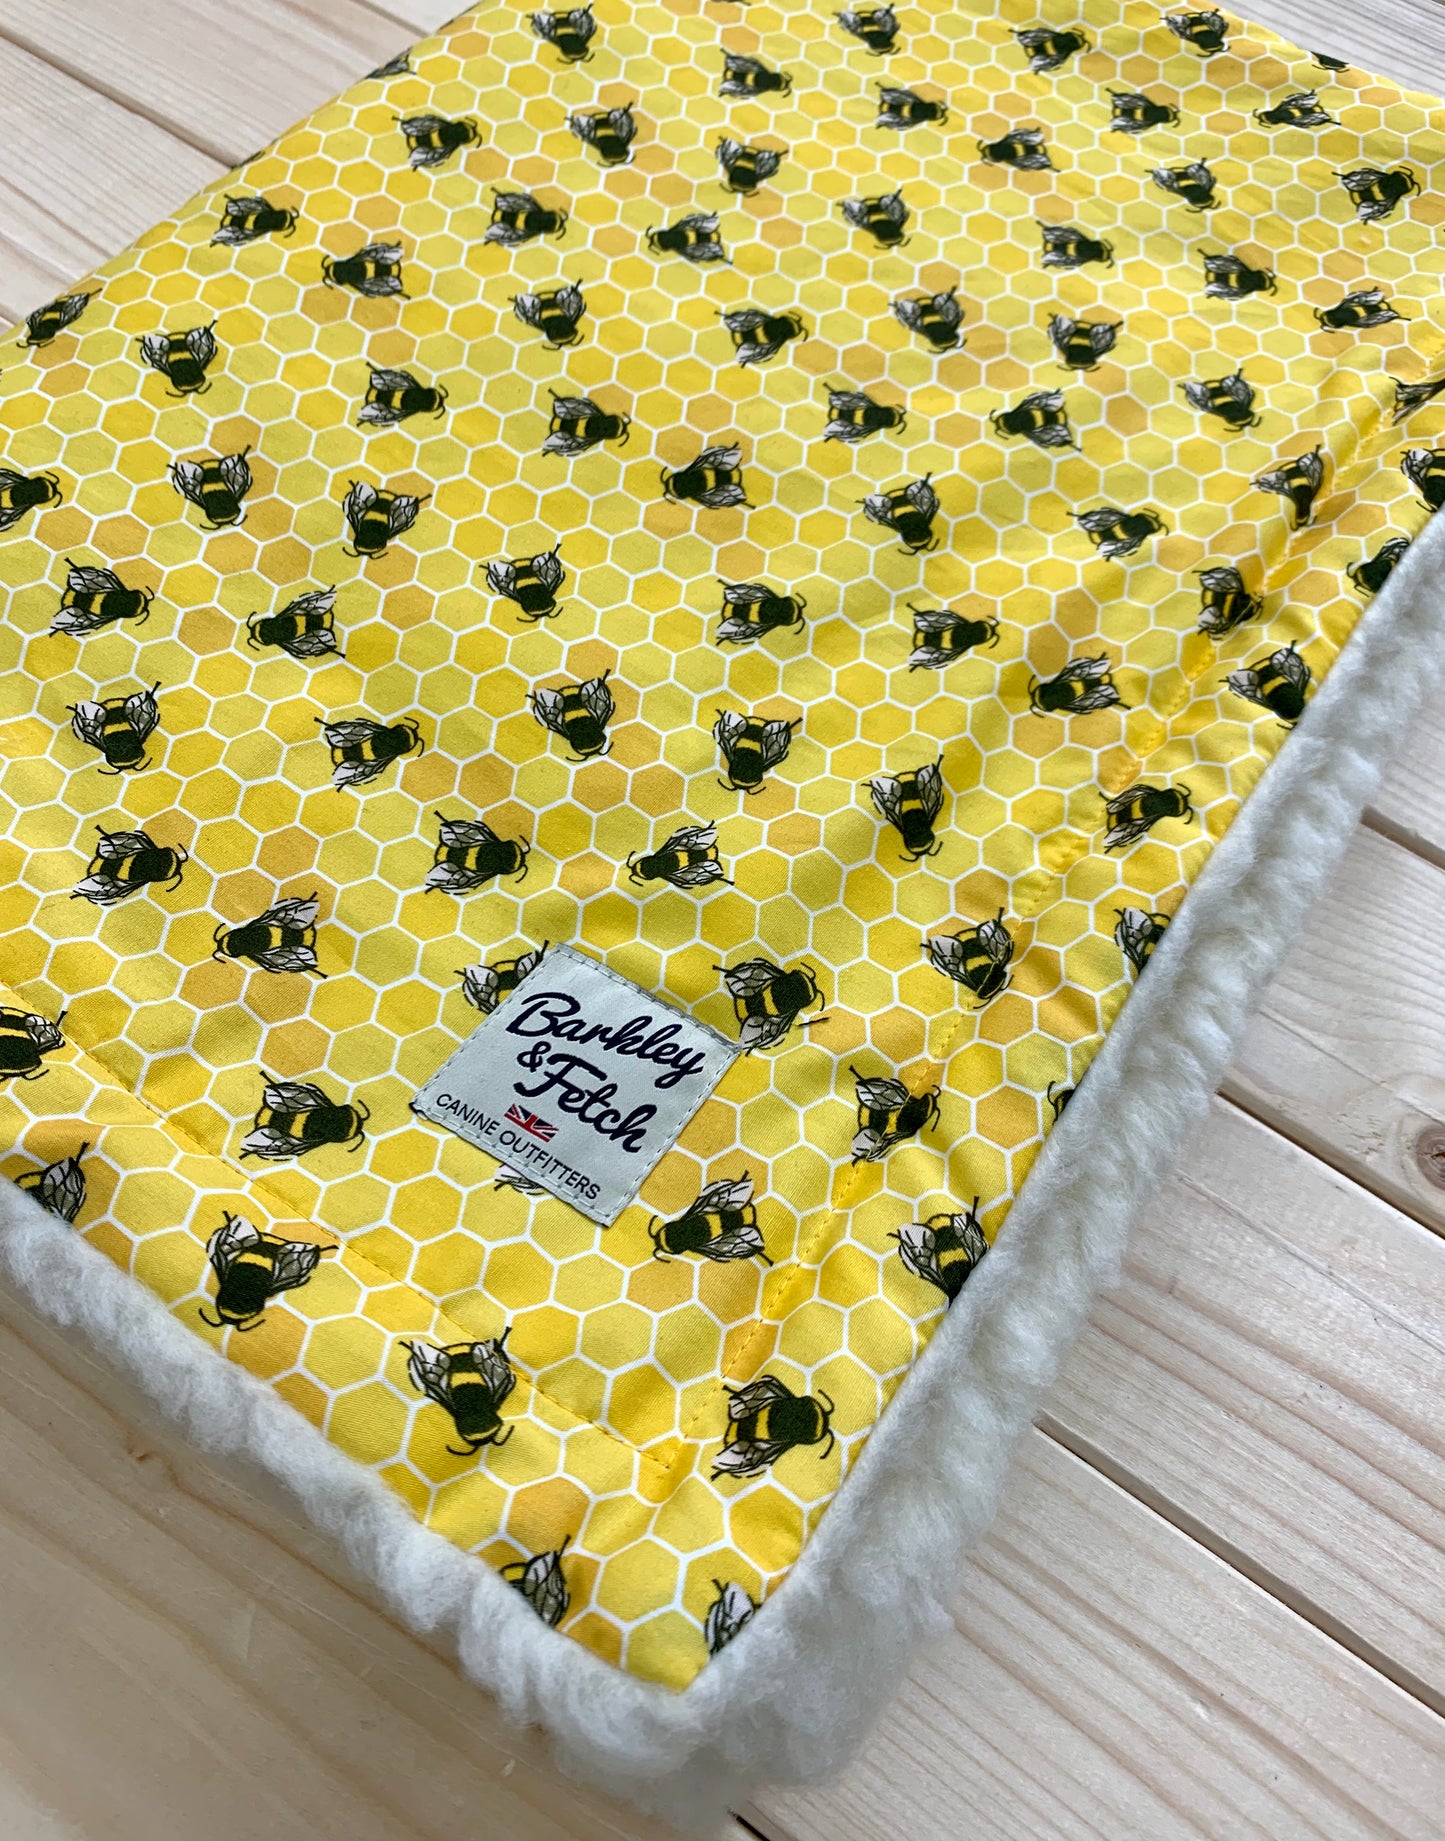 Bee Print Dog Blanket